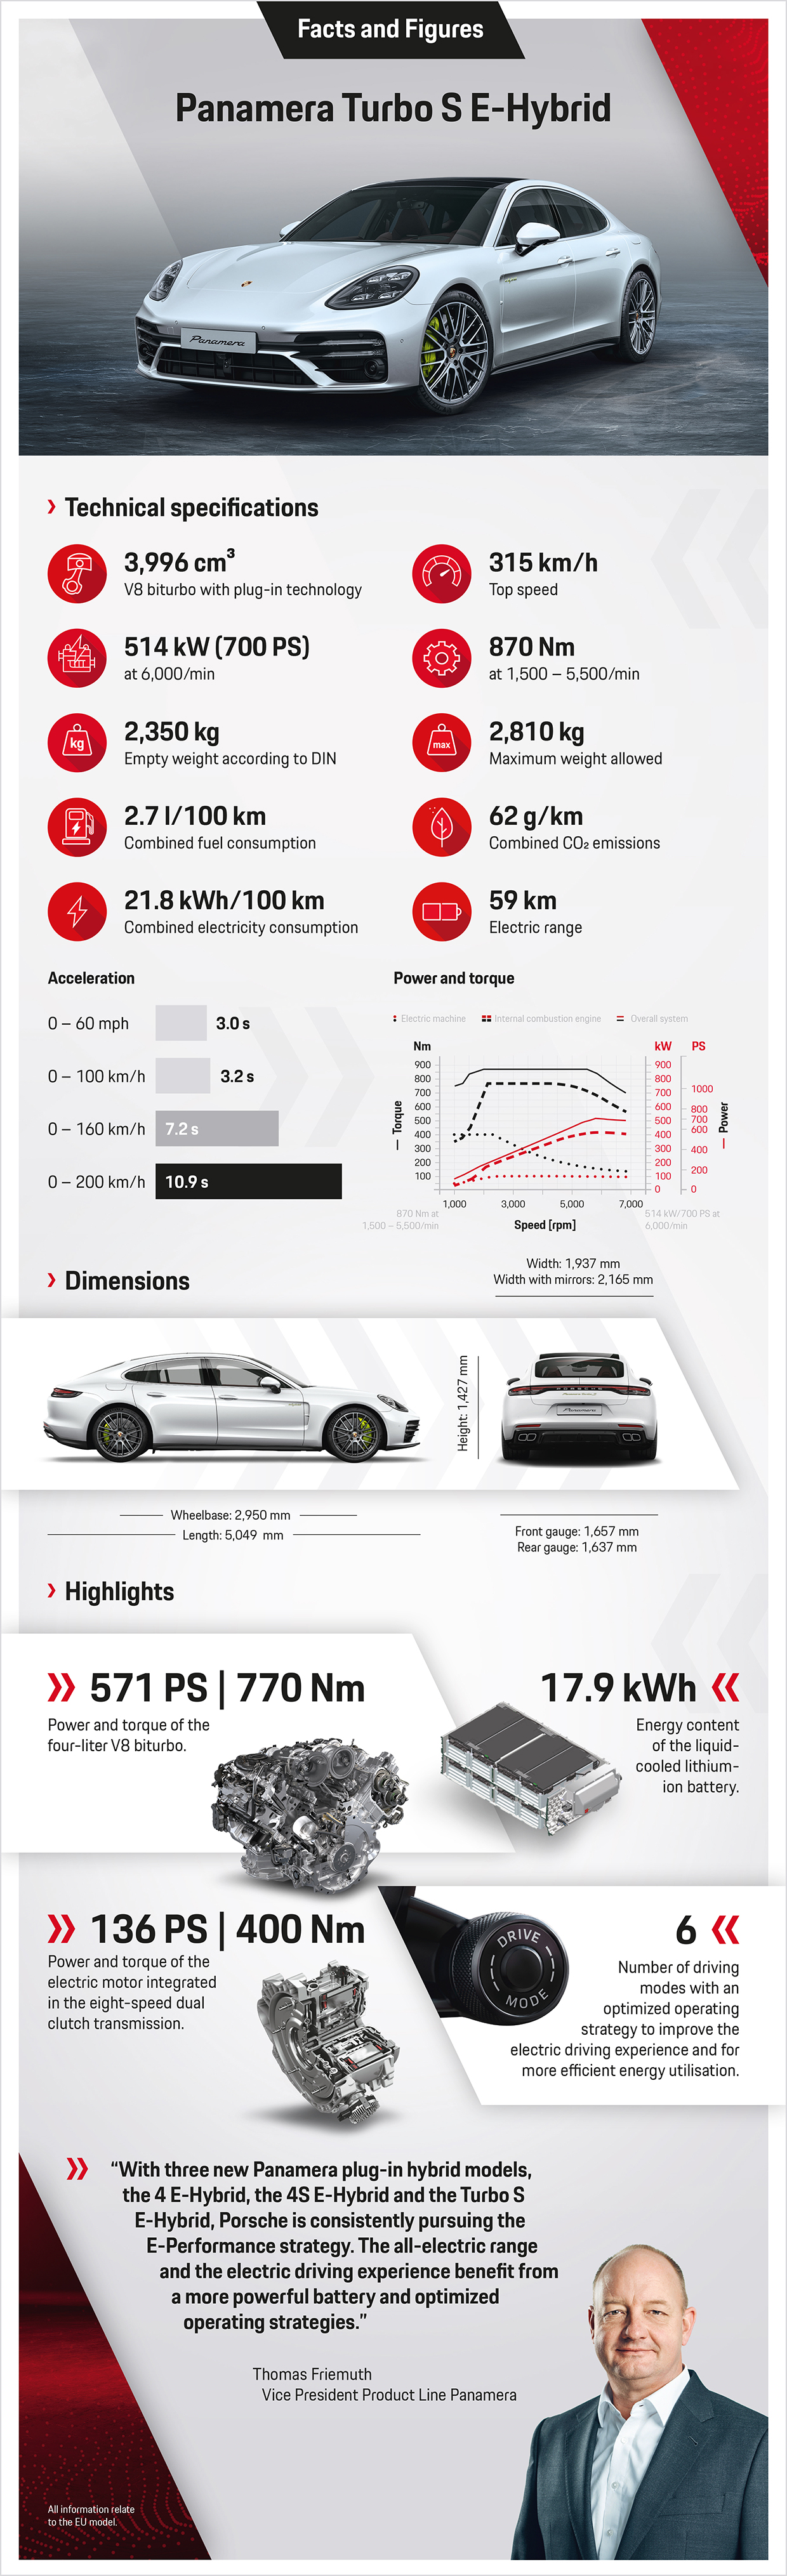 Panamera Turbo S E-Hybrid, Infographic, 2020, Porsche AG